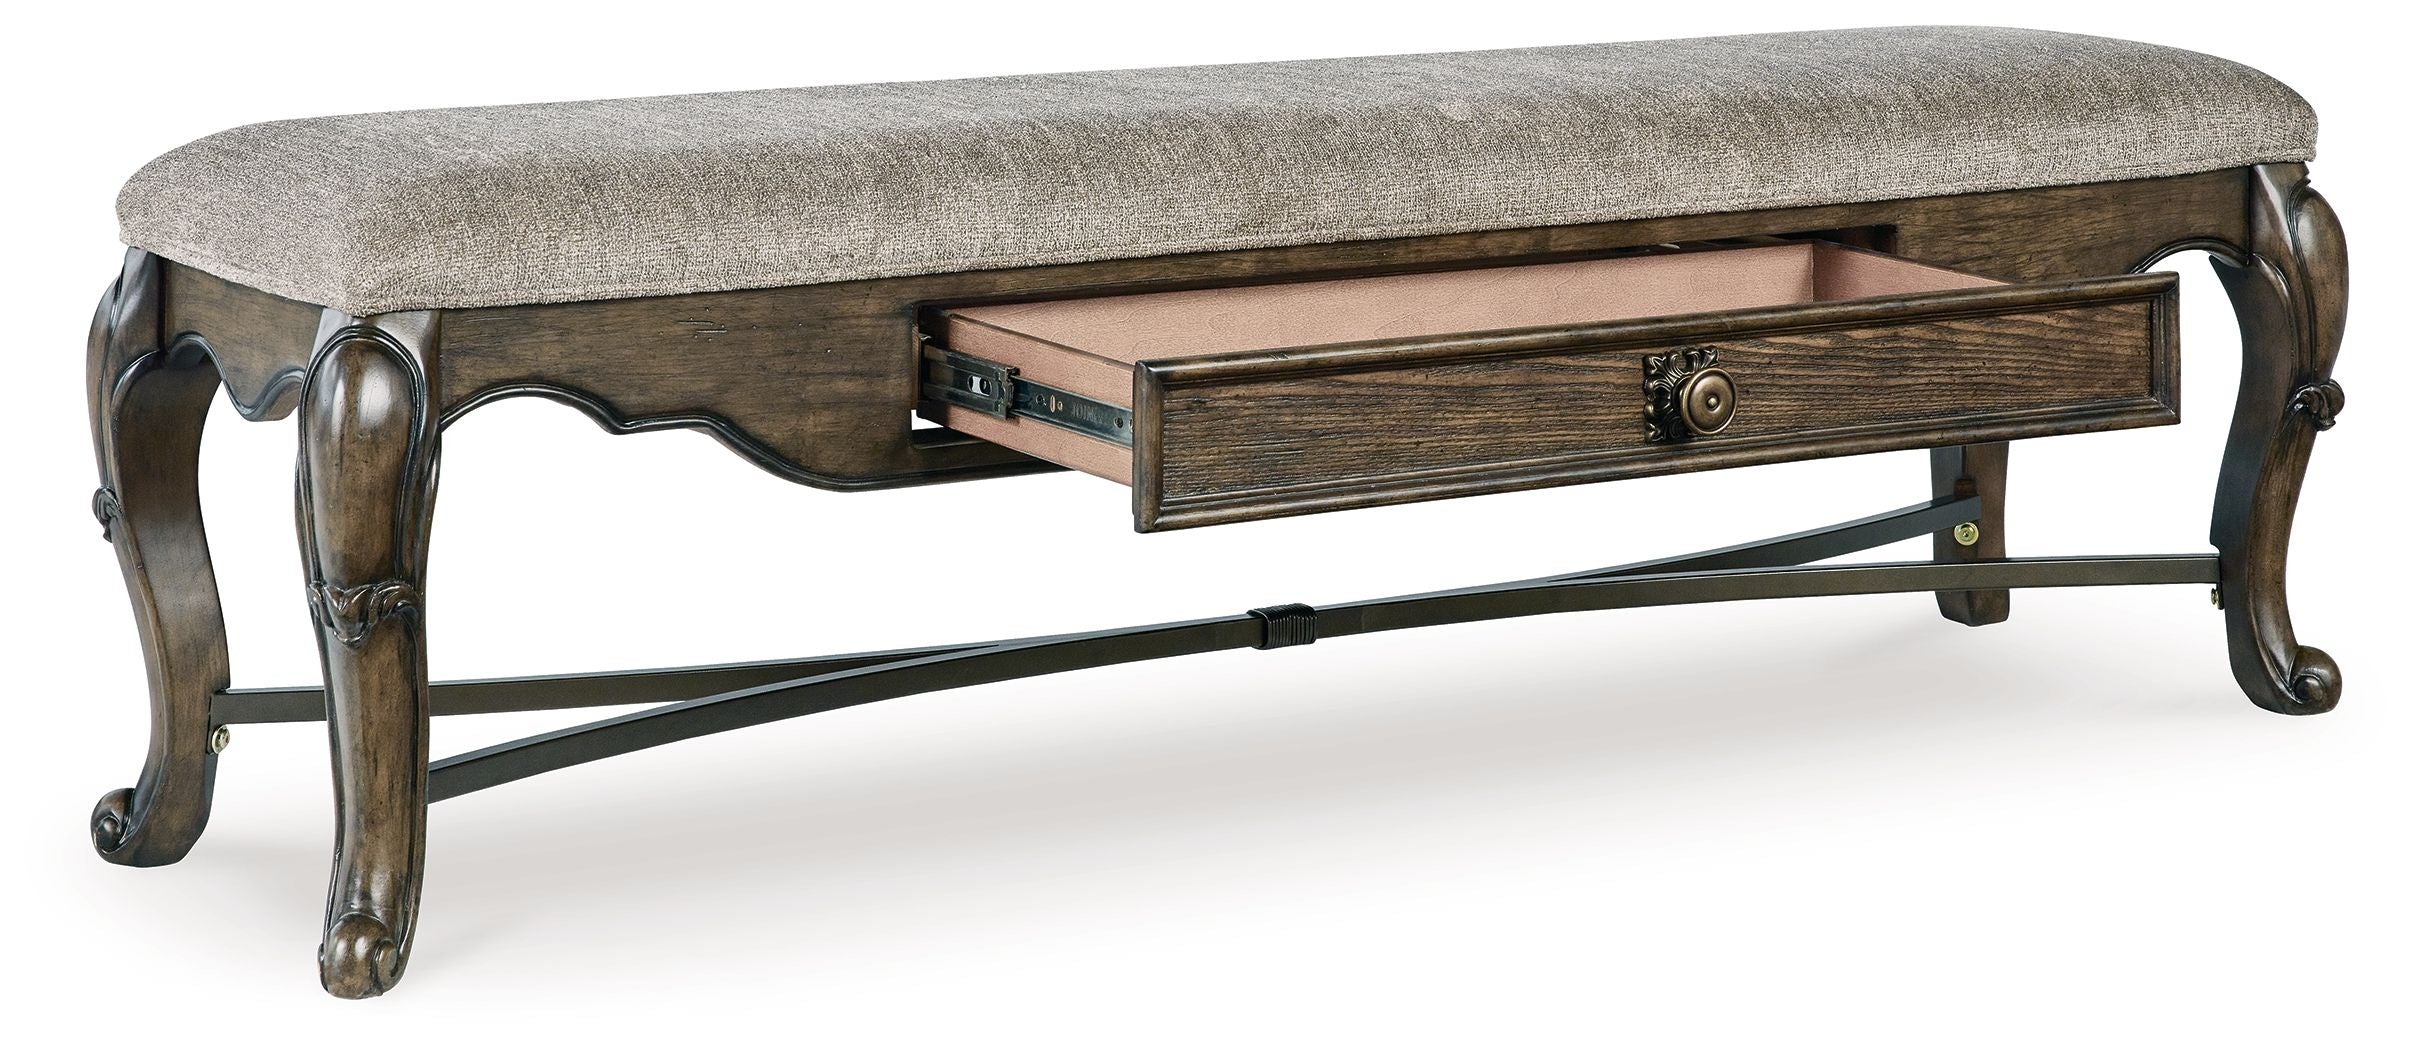 Maylee - Dark Brown - Upholstered Storage Bench - 5th Avenue Furniture